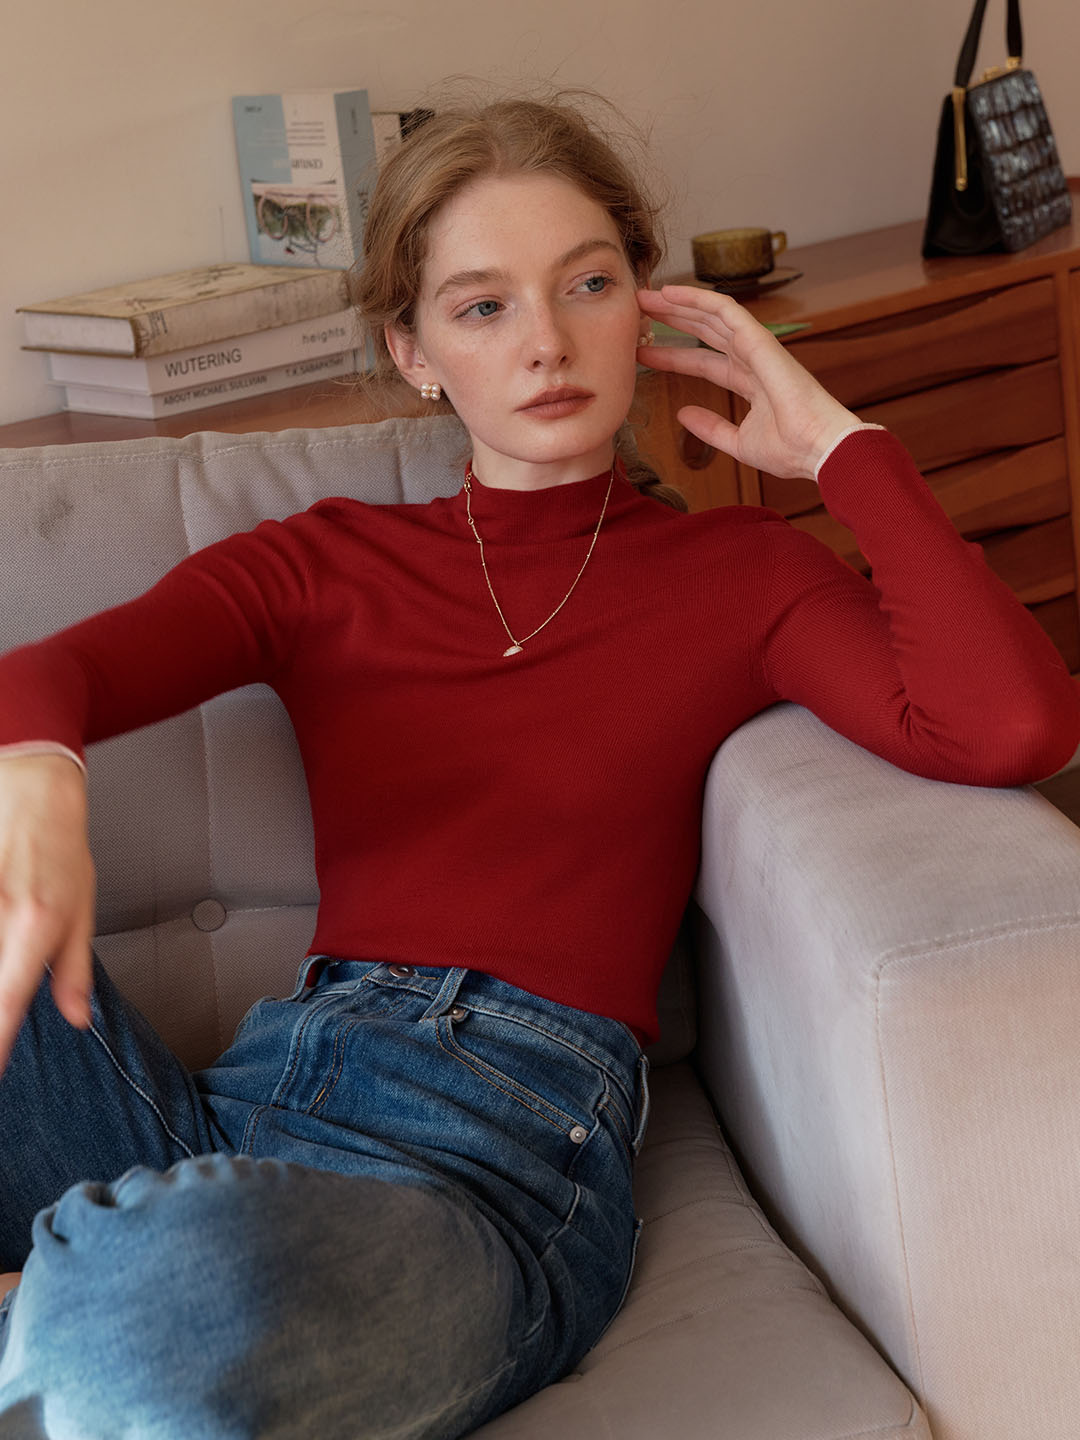 Lisa 半高領修身純色羊毛衫-紅色